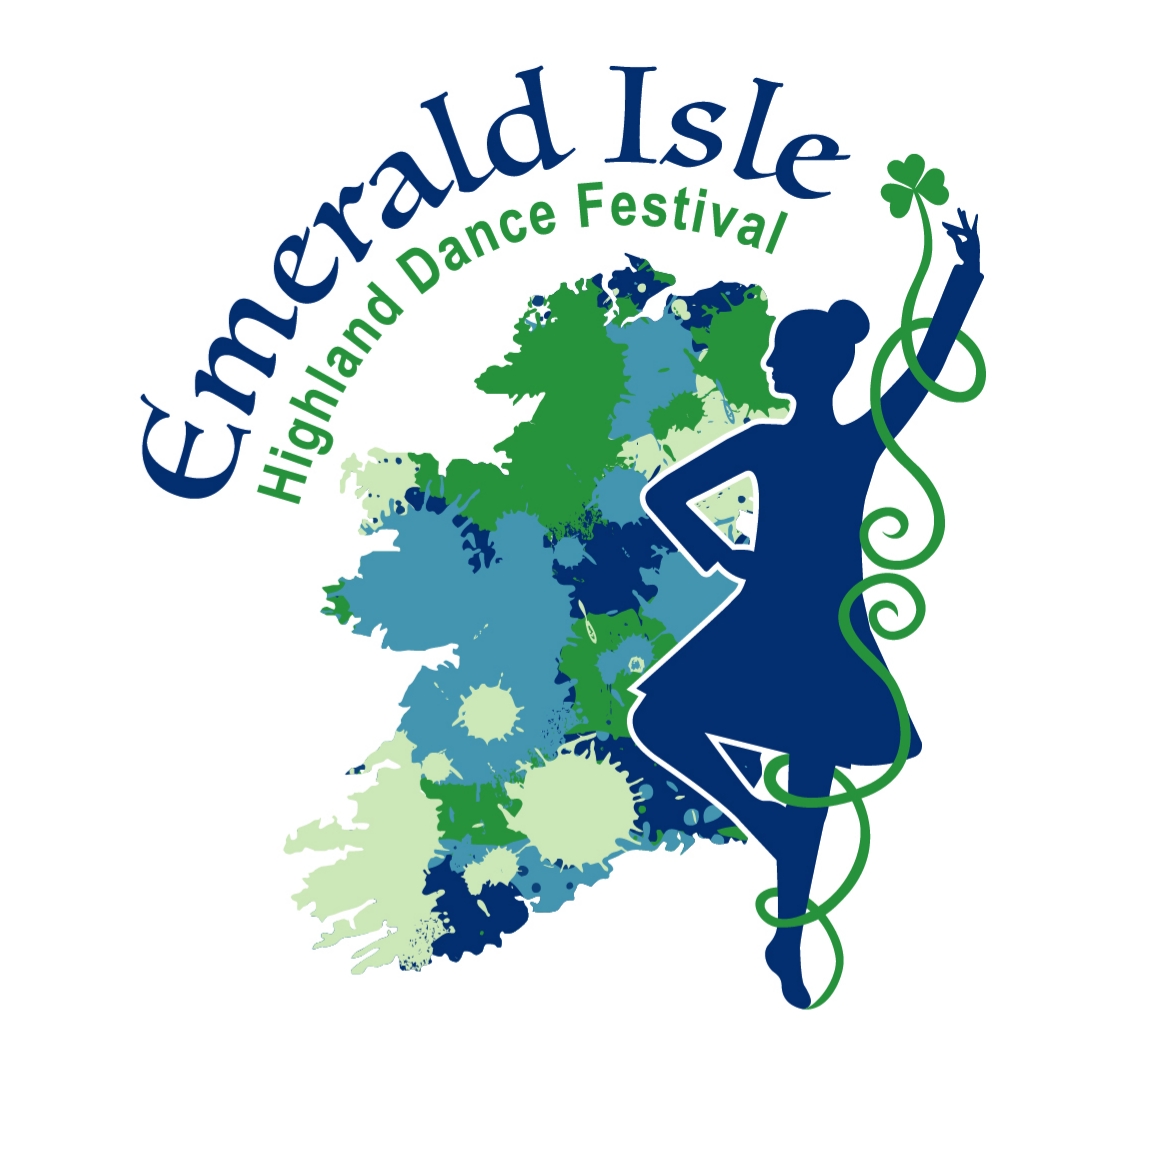 The Emerald Isle Highland Dance Festival, Comber, Northern Ireland